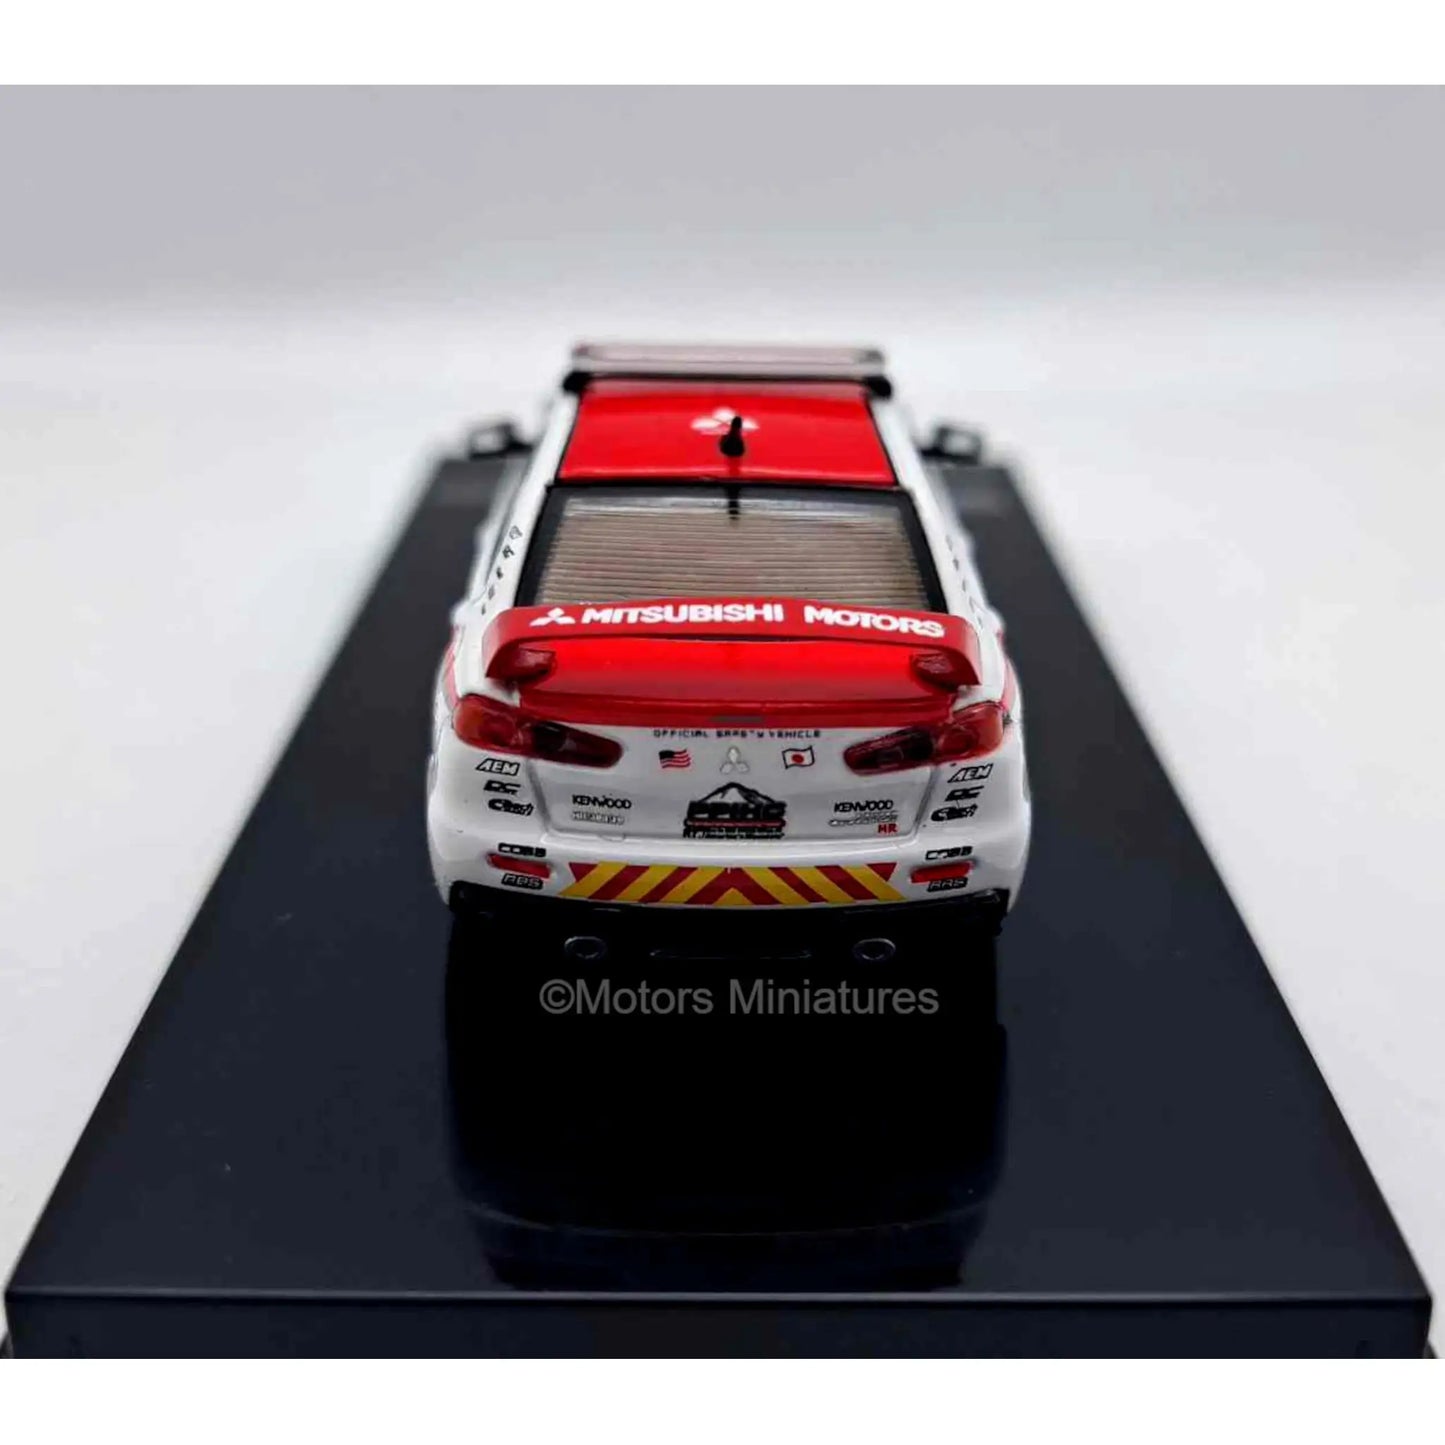 Mitsubishi Lancer Evo X Pikes Peak Safety Car Tarmac Works 1/64 | Motors Miniatures